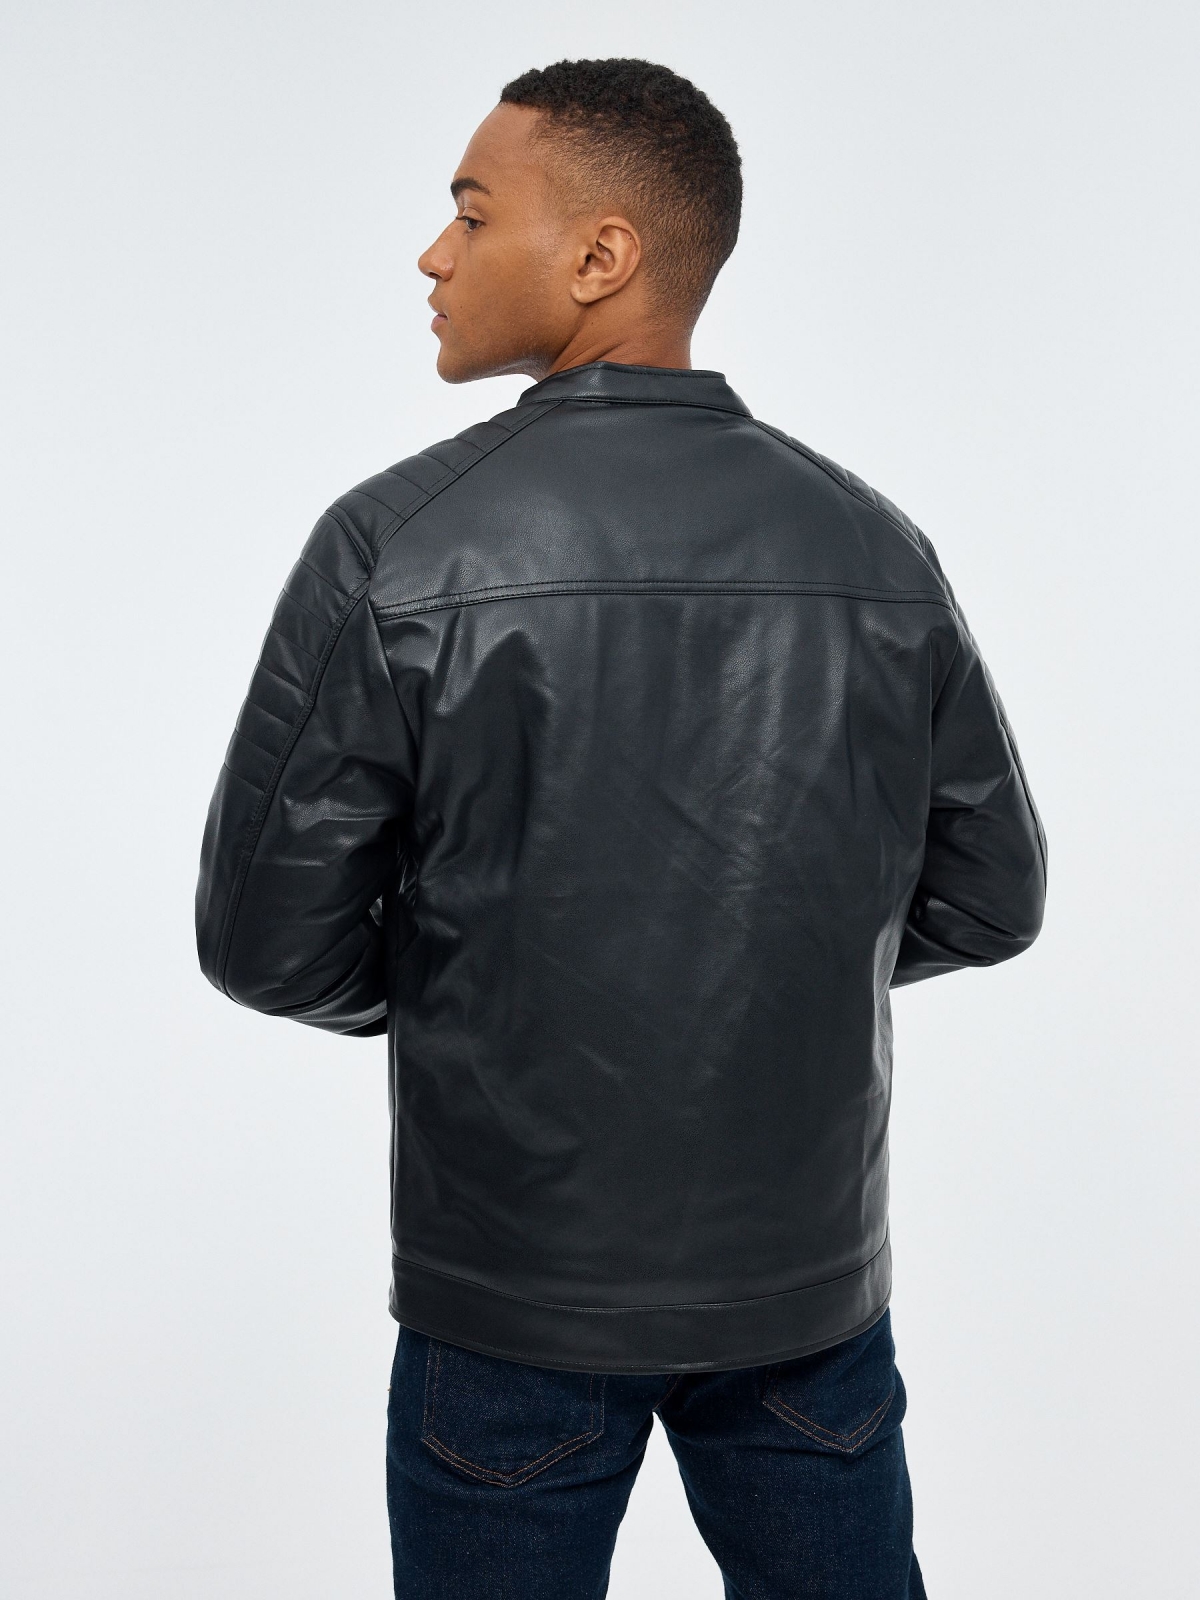 Black leather effect jacket black middle back view